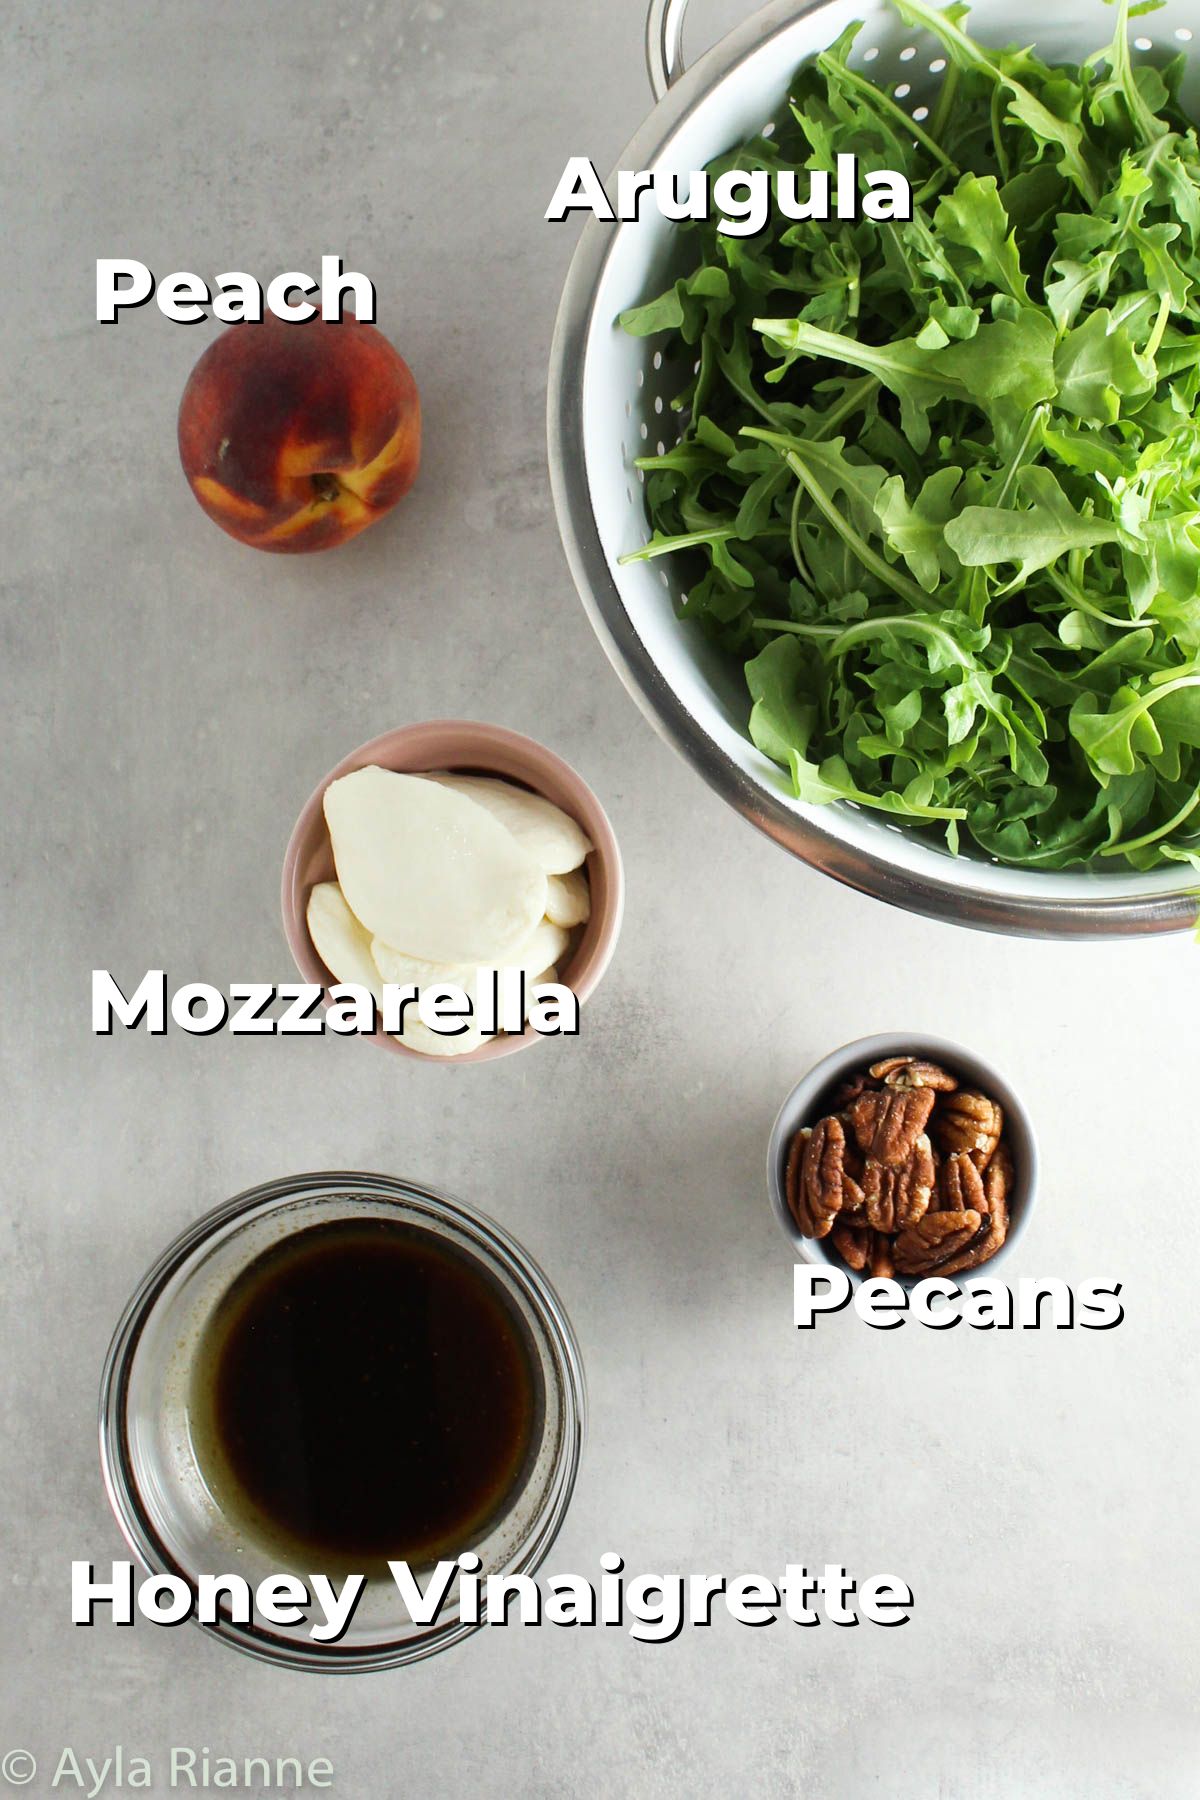 ingredients for peach arugula salad including arugula, peach, mozzarella, pecans, and honey vinaigrette